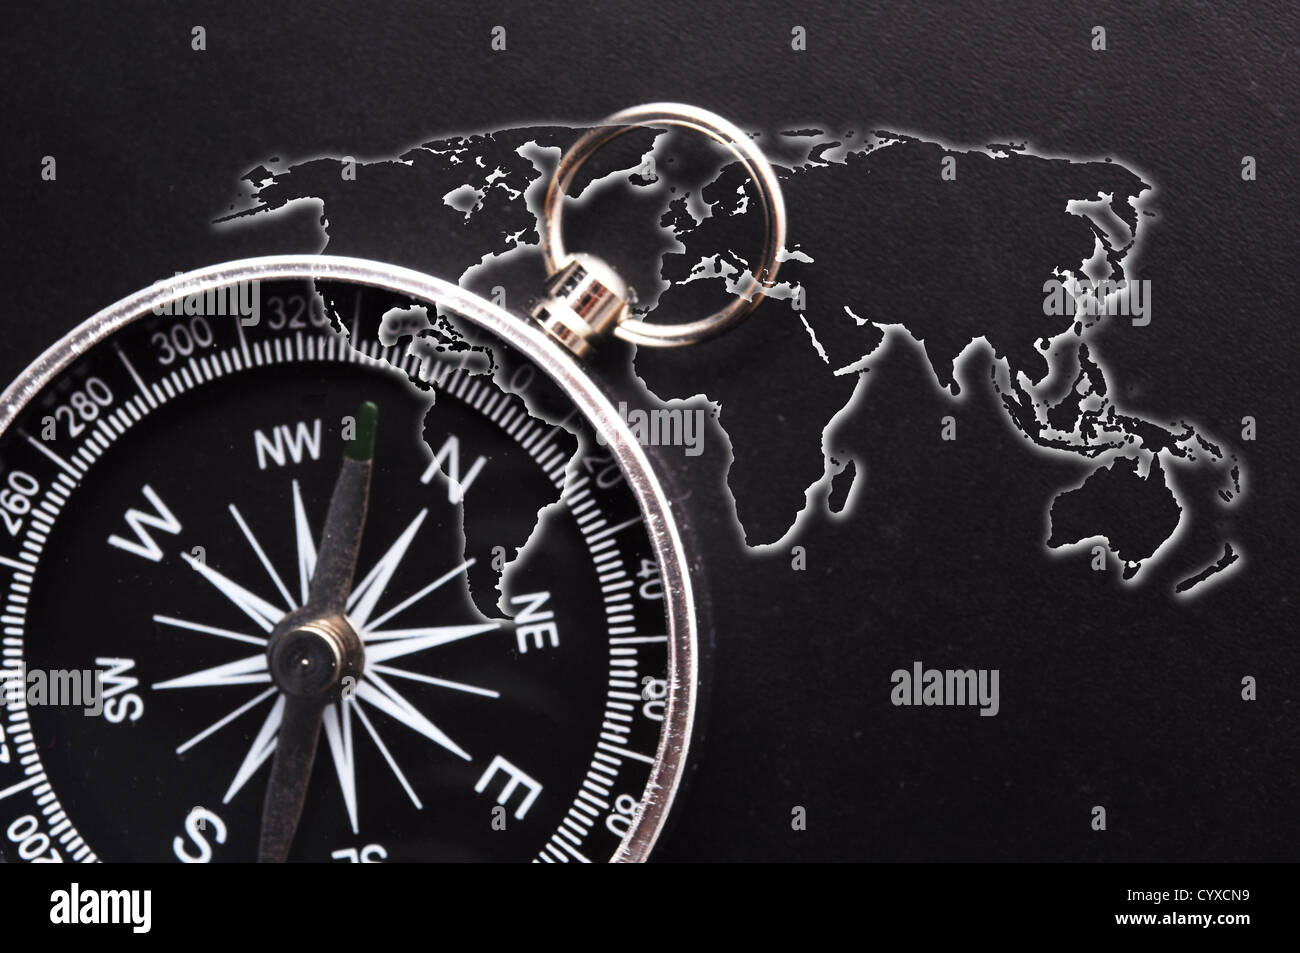 45+] Compass Backgrounds - WallpaperSafari